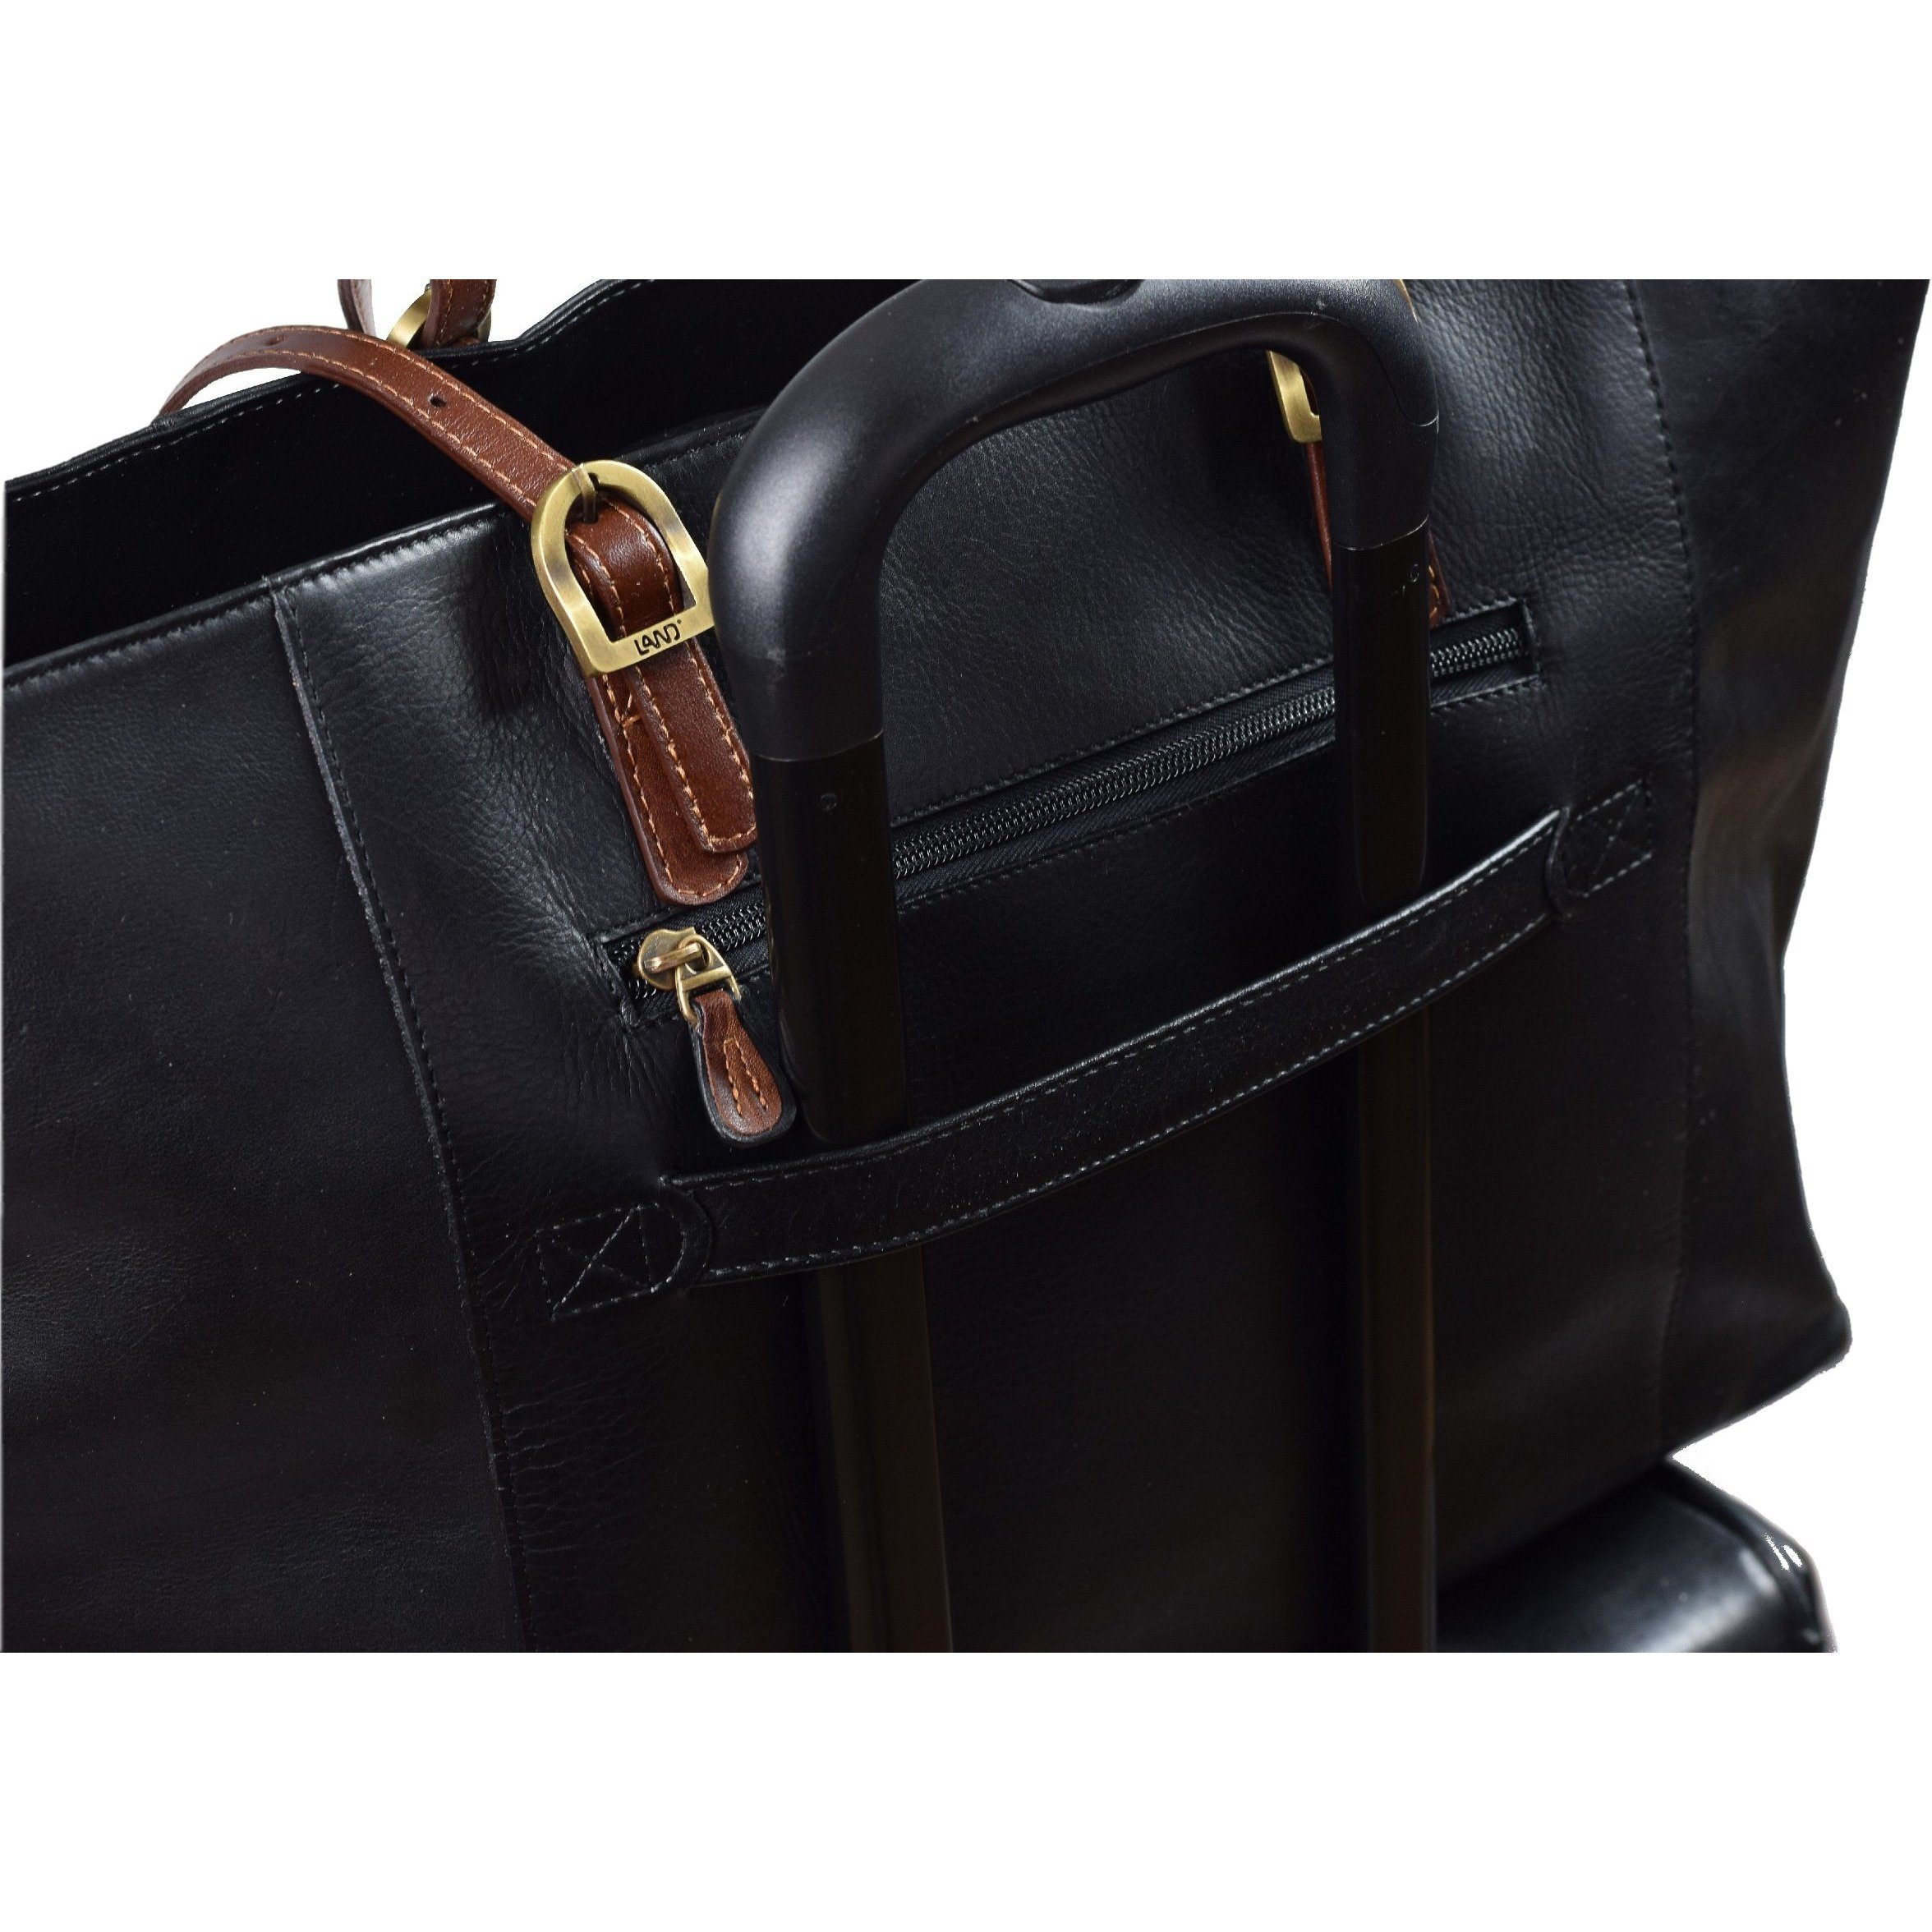 Santa Fe Cleopatra Shopper, Handbag | LAND Leather